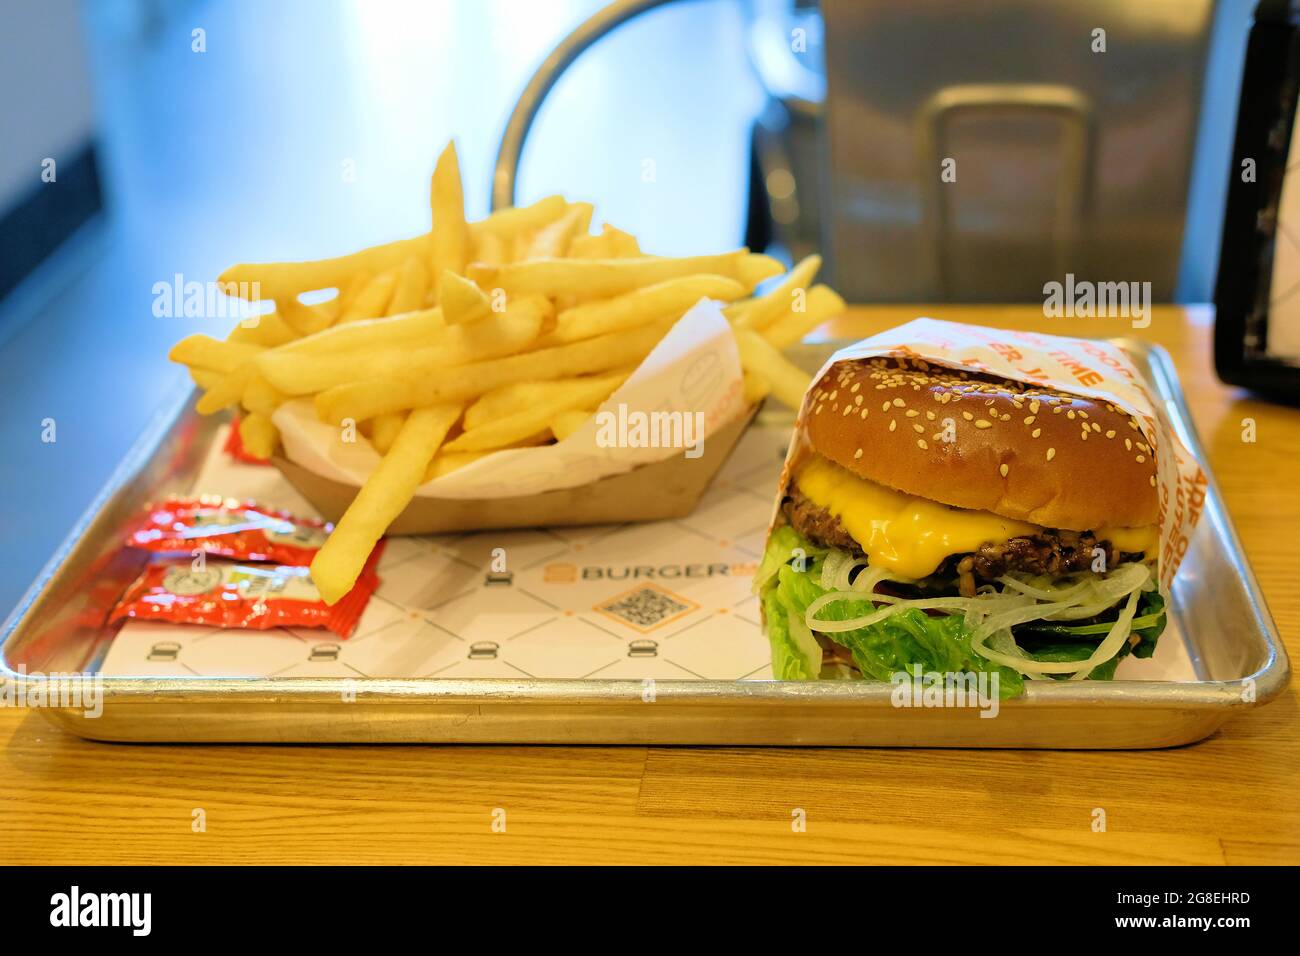 Hamburger and fries on a tray at the Burgerim restaurant; an Israeli fast food hamburger franchise featuring fast-casual gourmet burgers. Stock Photo